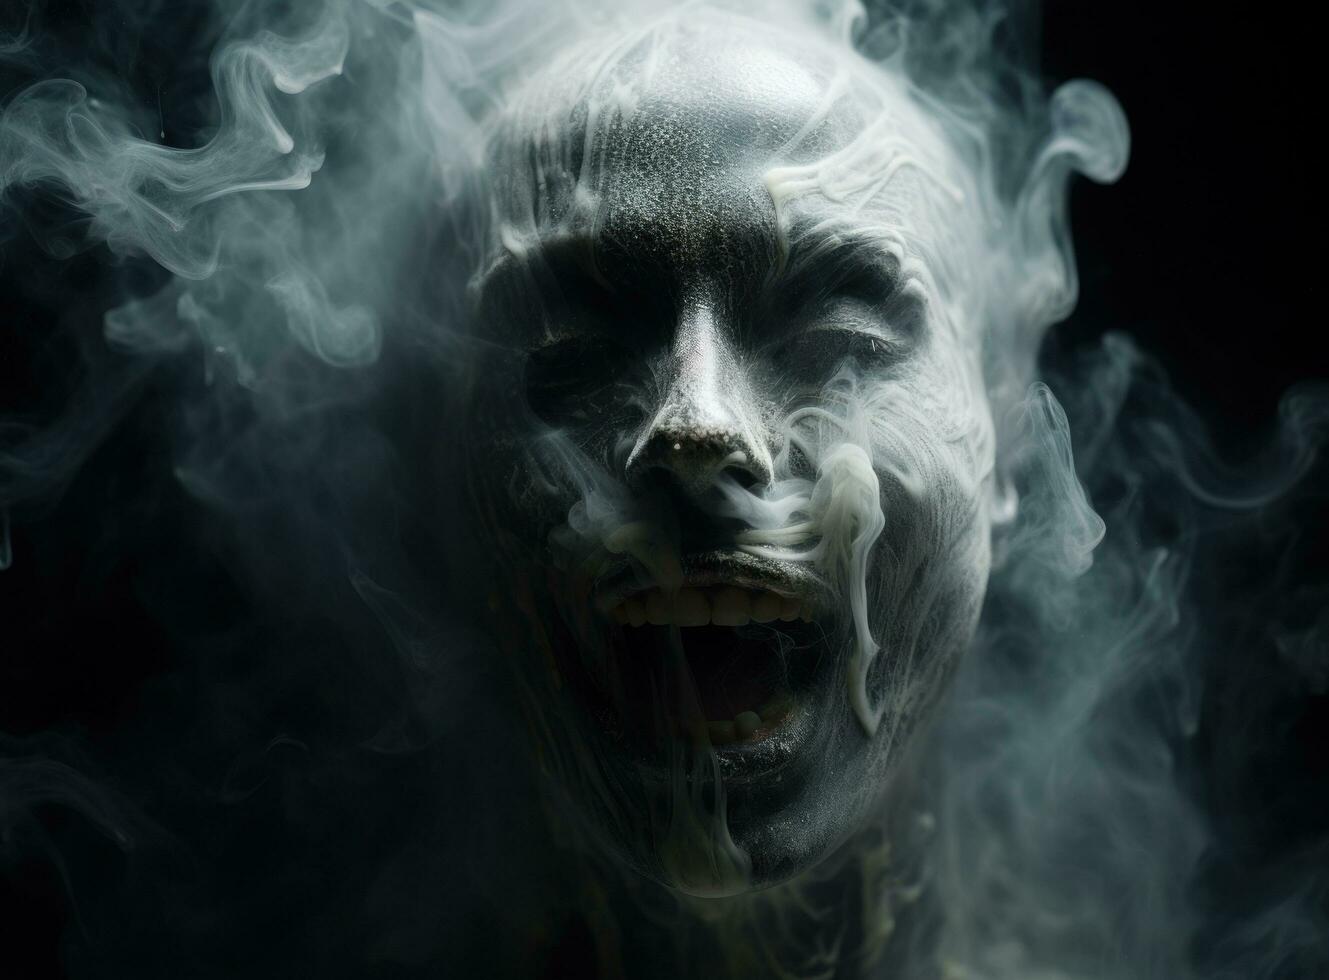 Scary zombie on dark background photo